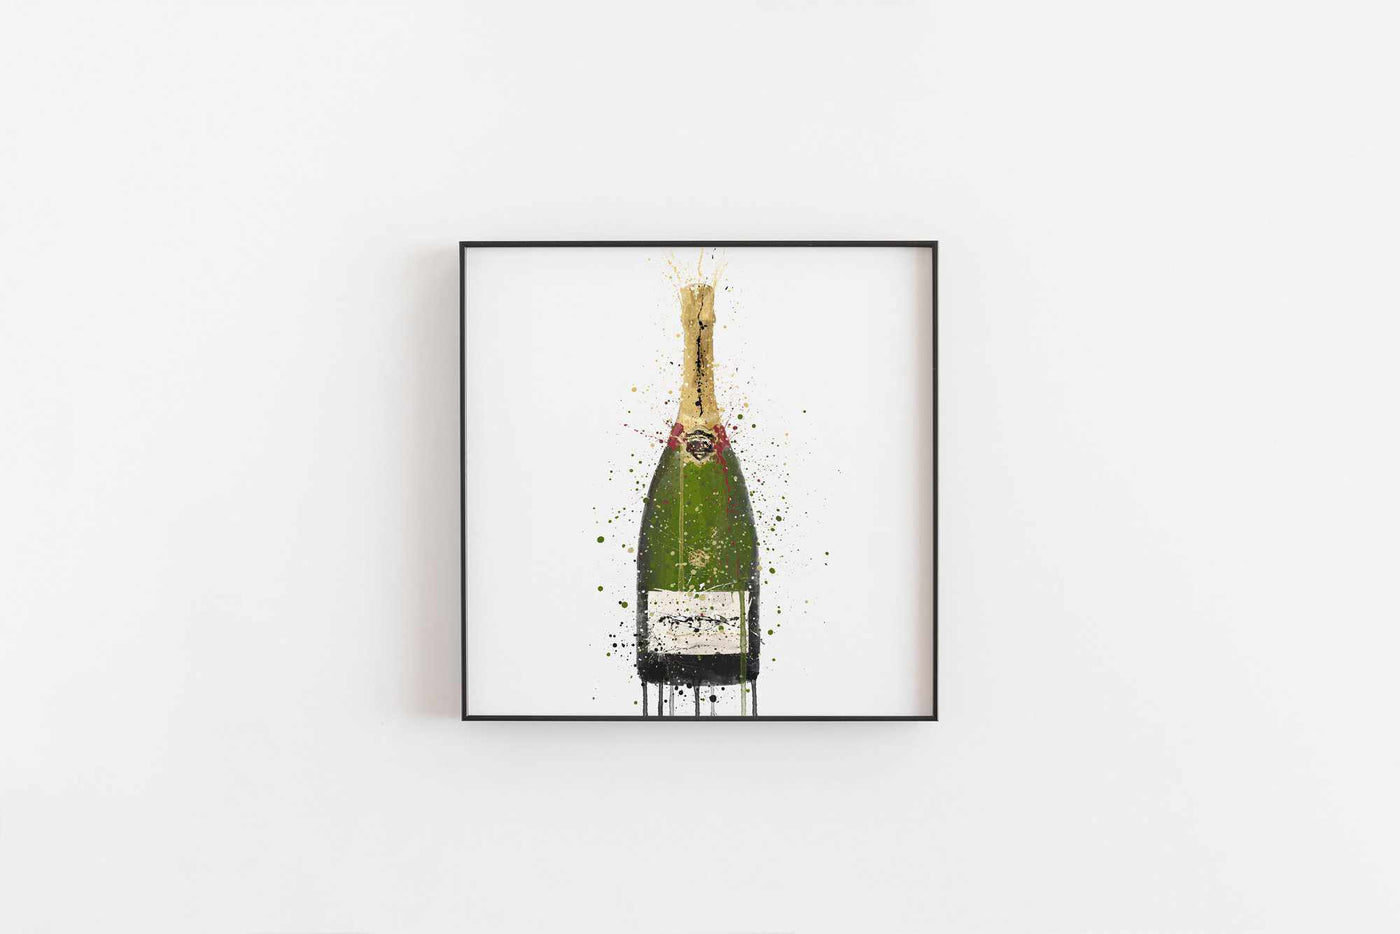 Champagne Bottle Wall Art Print 'Olive Green'